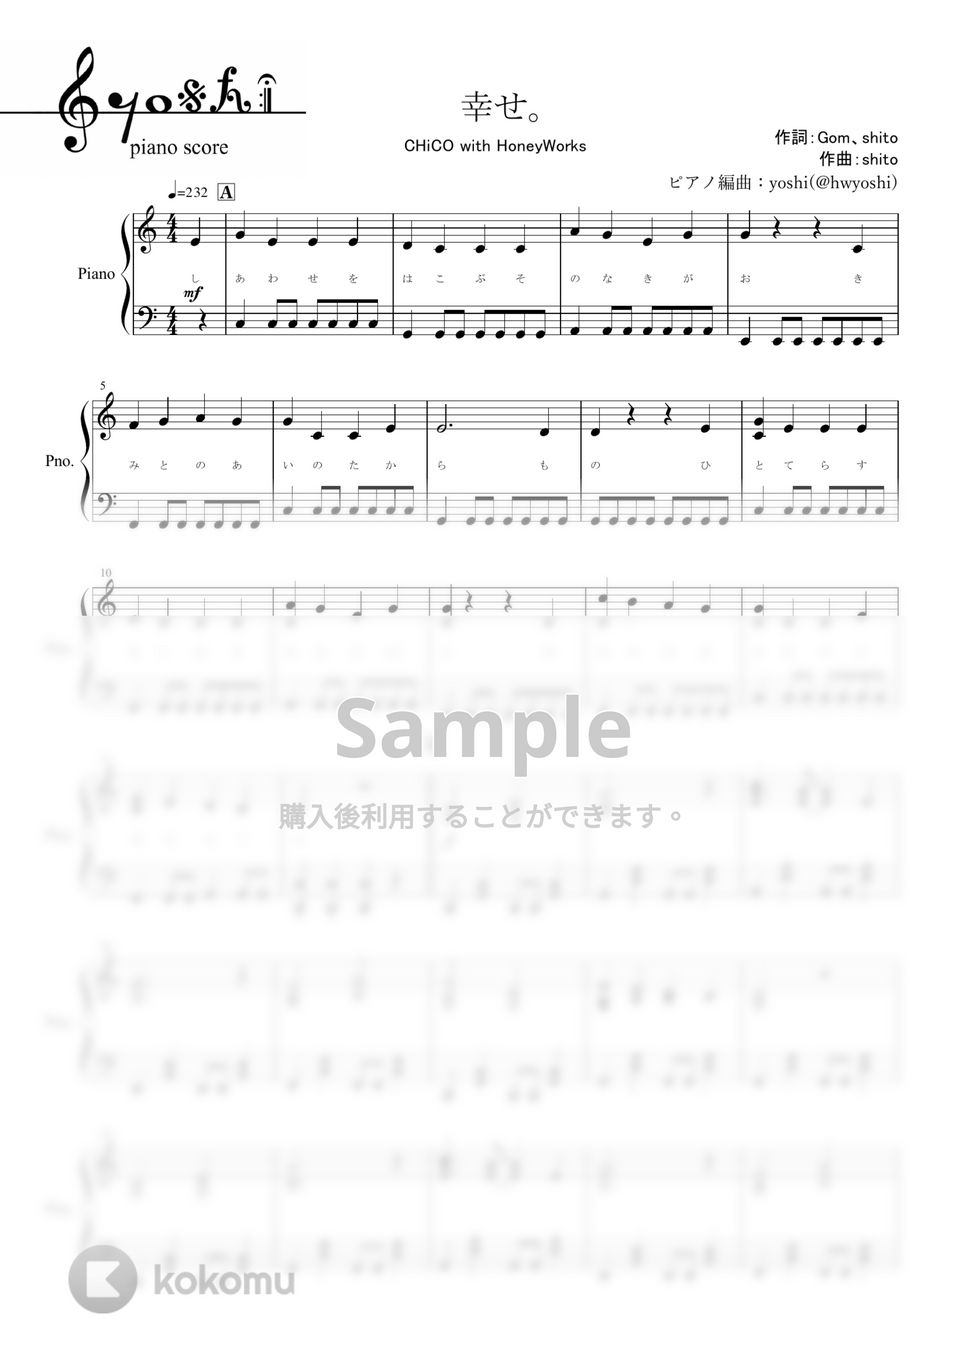 CHiCO with HoneyWorks - 幸せ。 (ピアノ楽譜/全８ページ) by yoshi